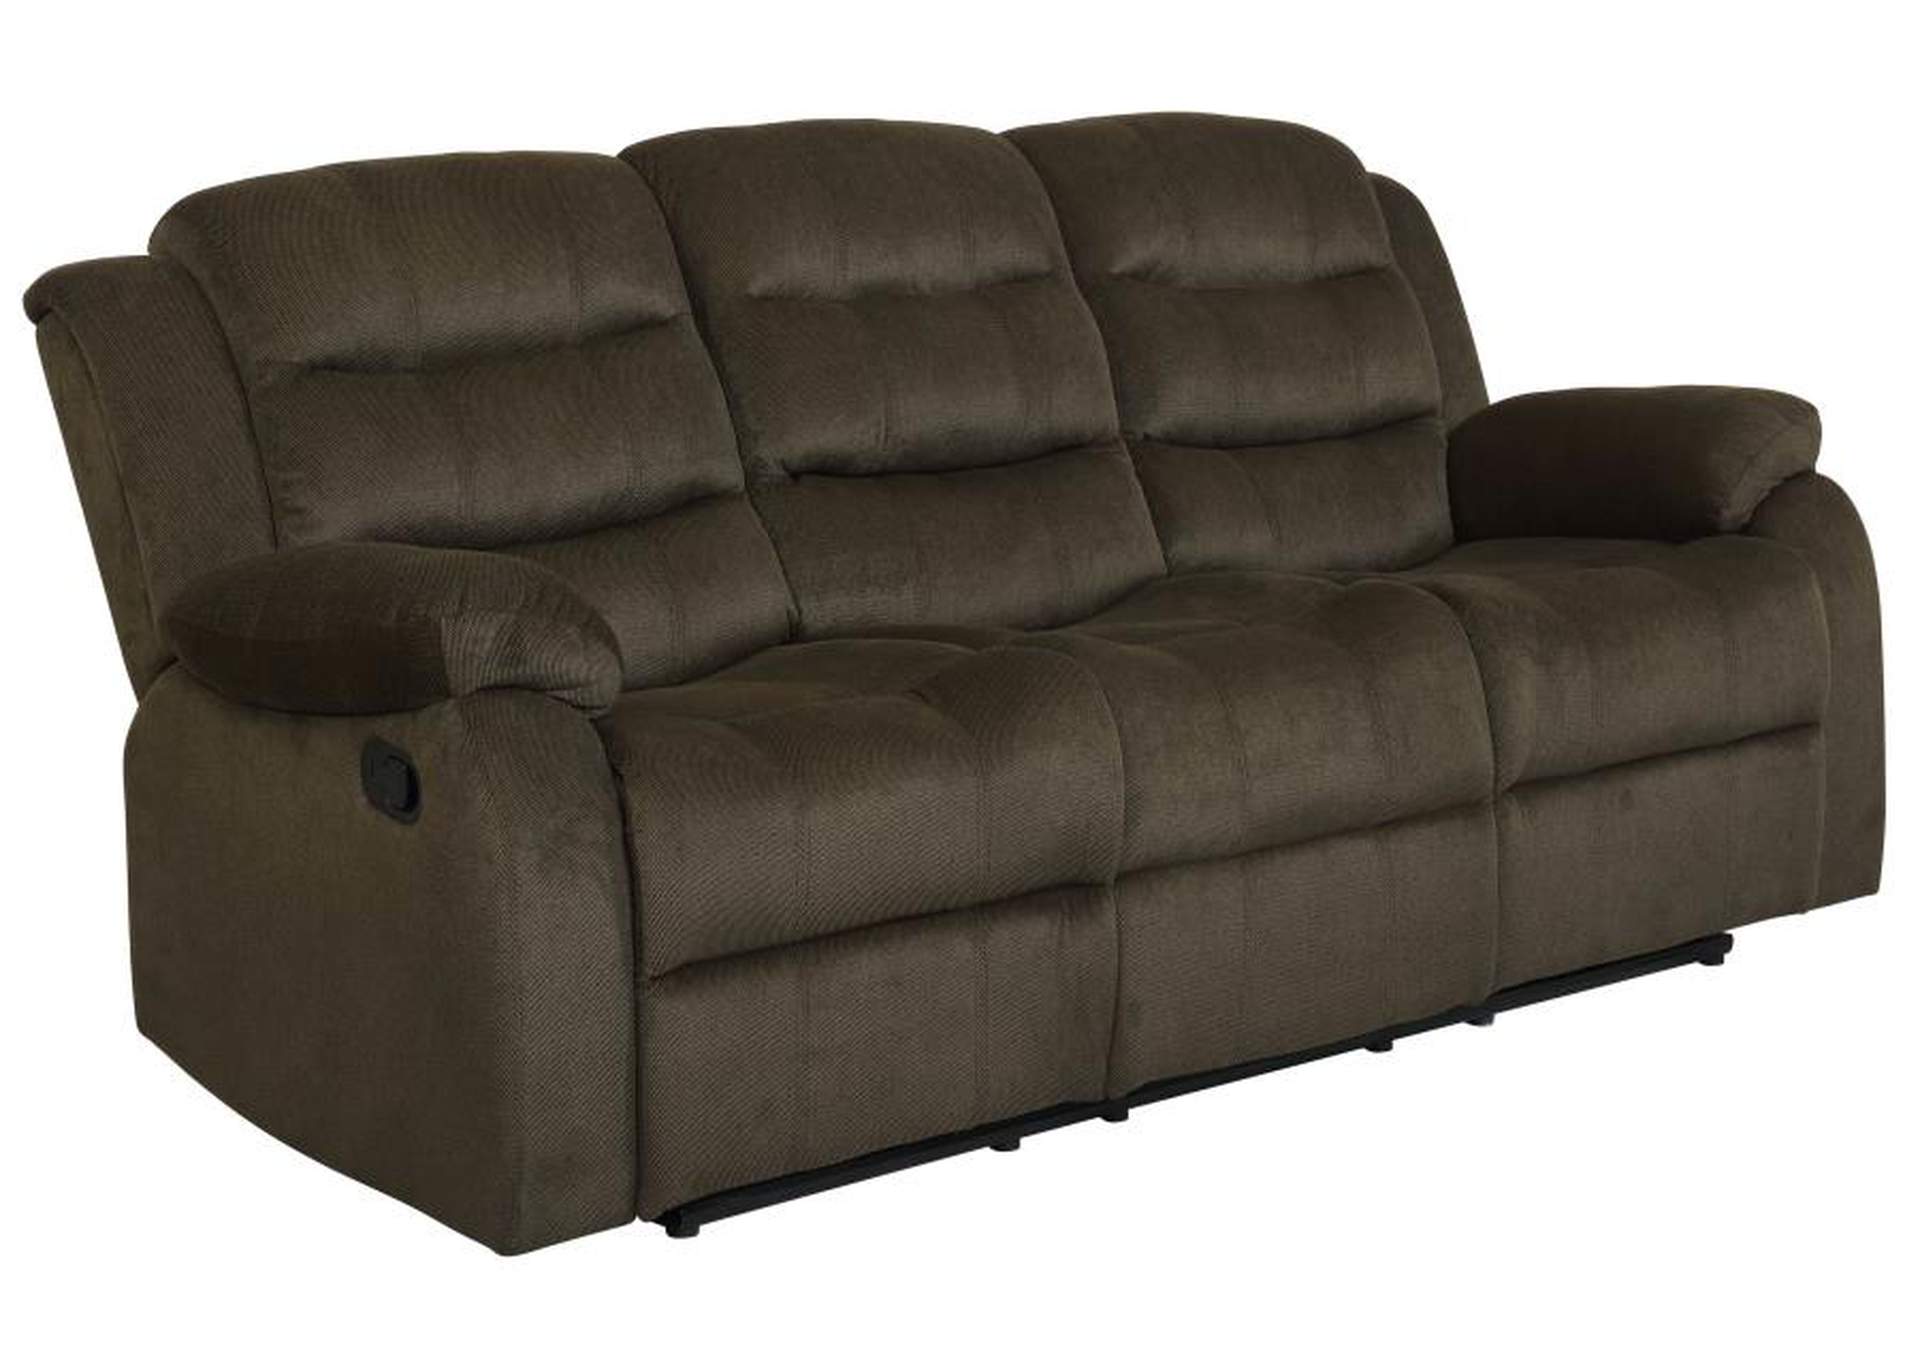 Rodman Pillow Top Arm Motion Sofa Olive Brown,Coaster Furniture